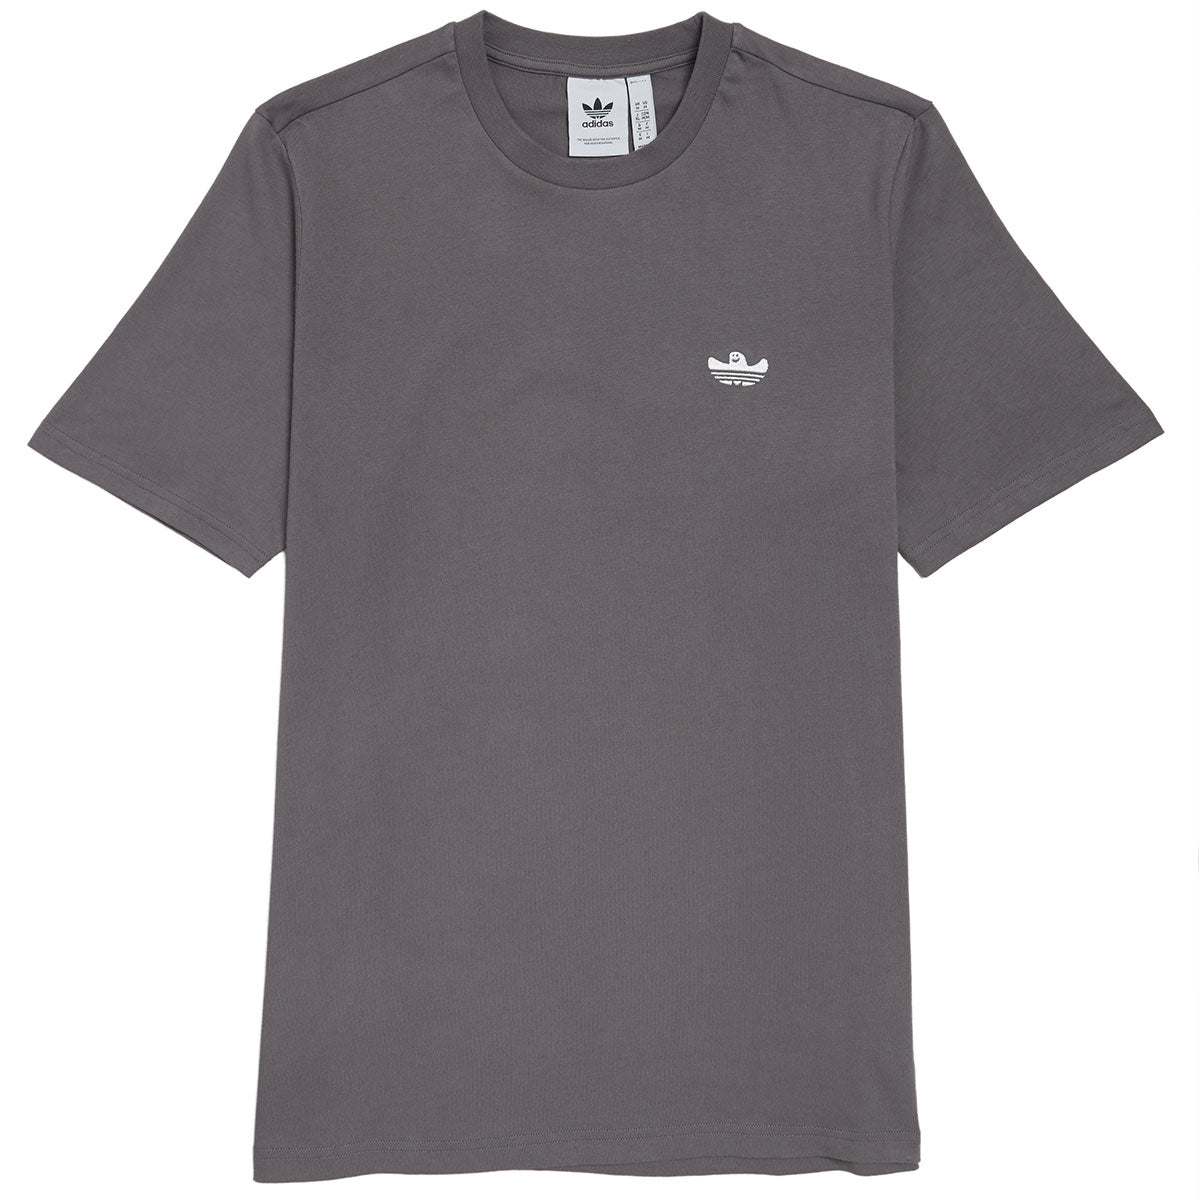 Adidas Shmoo Feather T-Shirt - Charcoal/Core White image 1